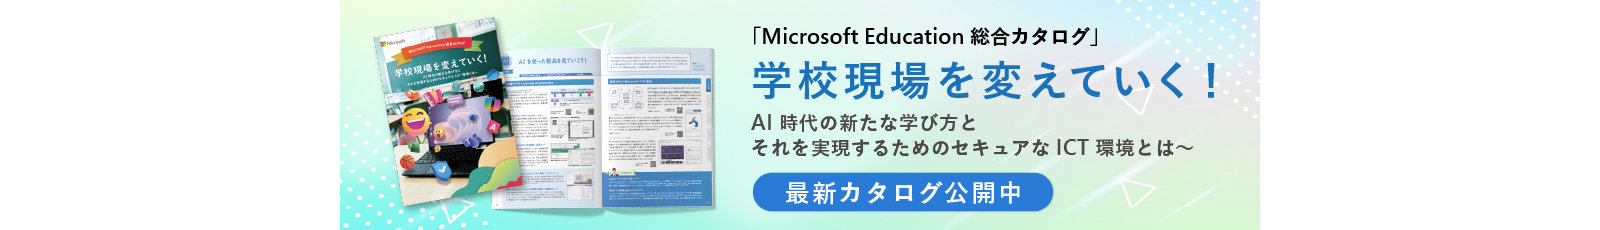 「Microsoft Education 総合カタログ」学校現場を変えていく！バナー